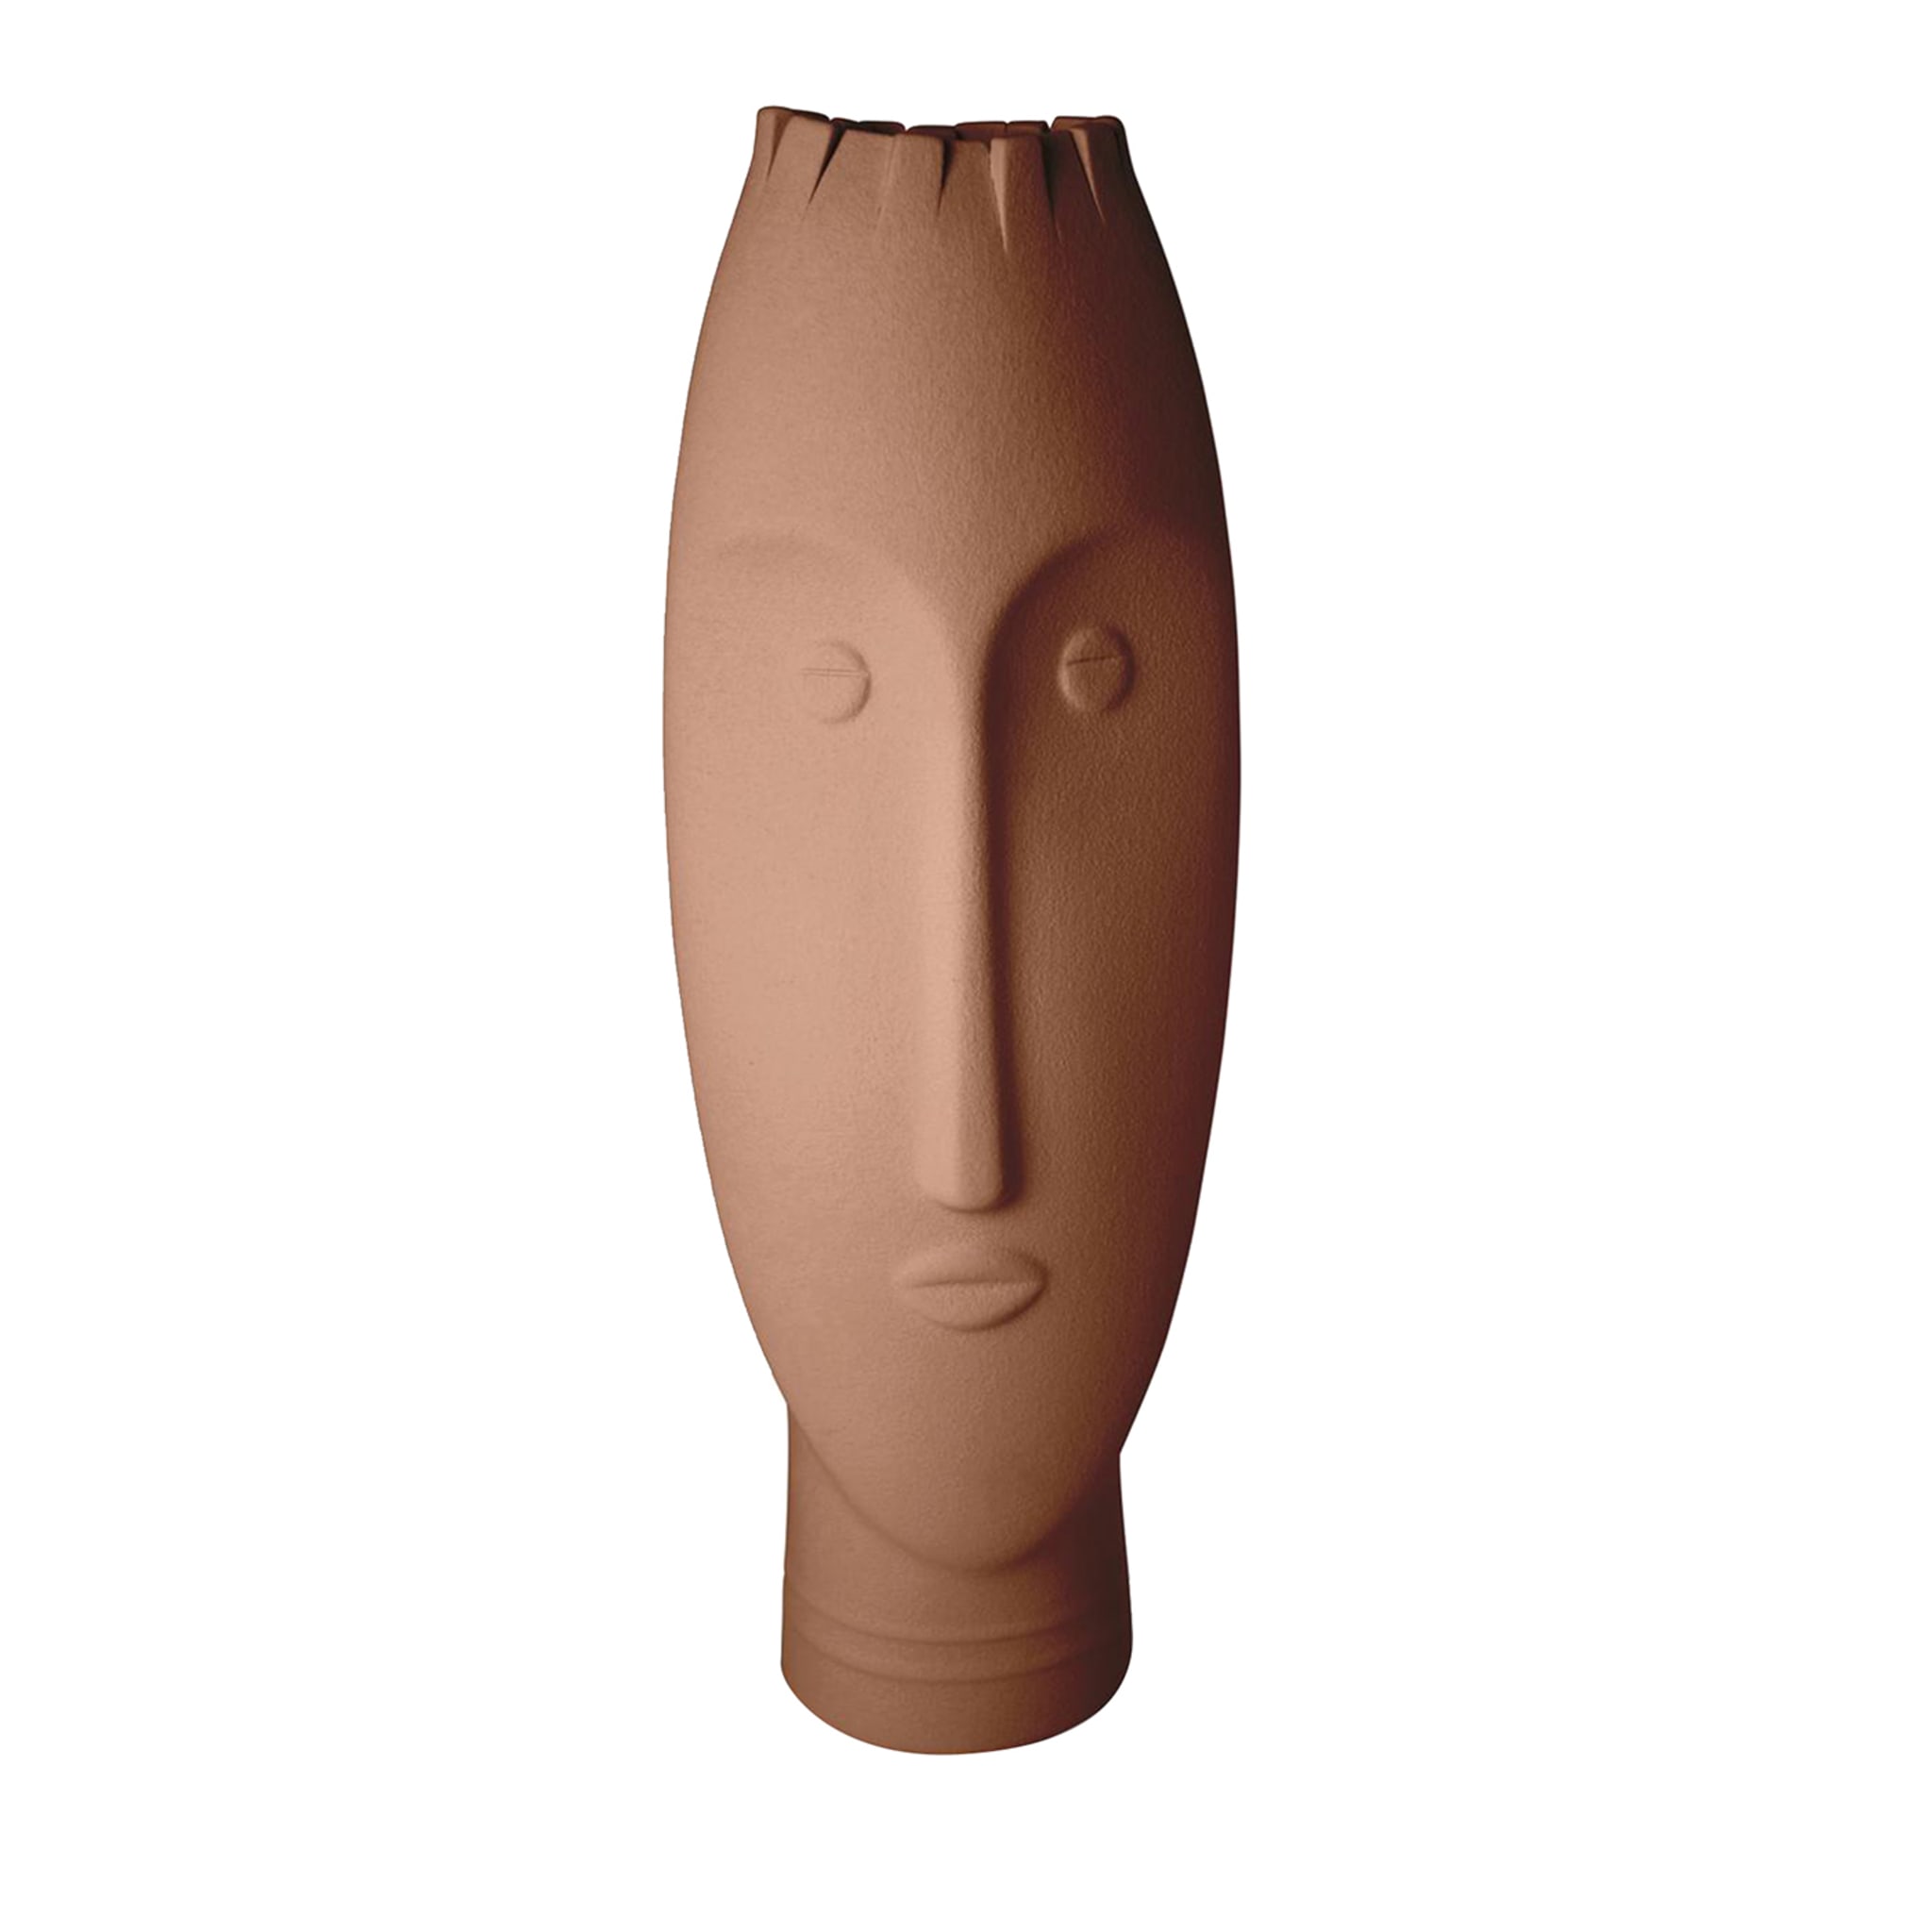 Moai-Vase #8 - Hauptansicht